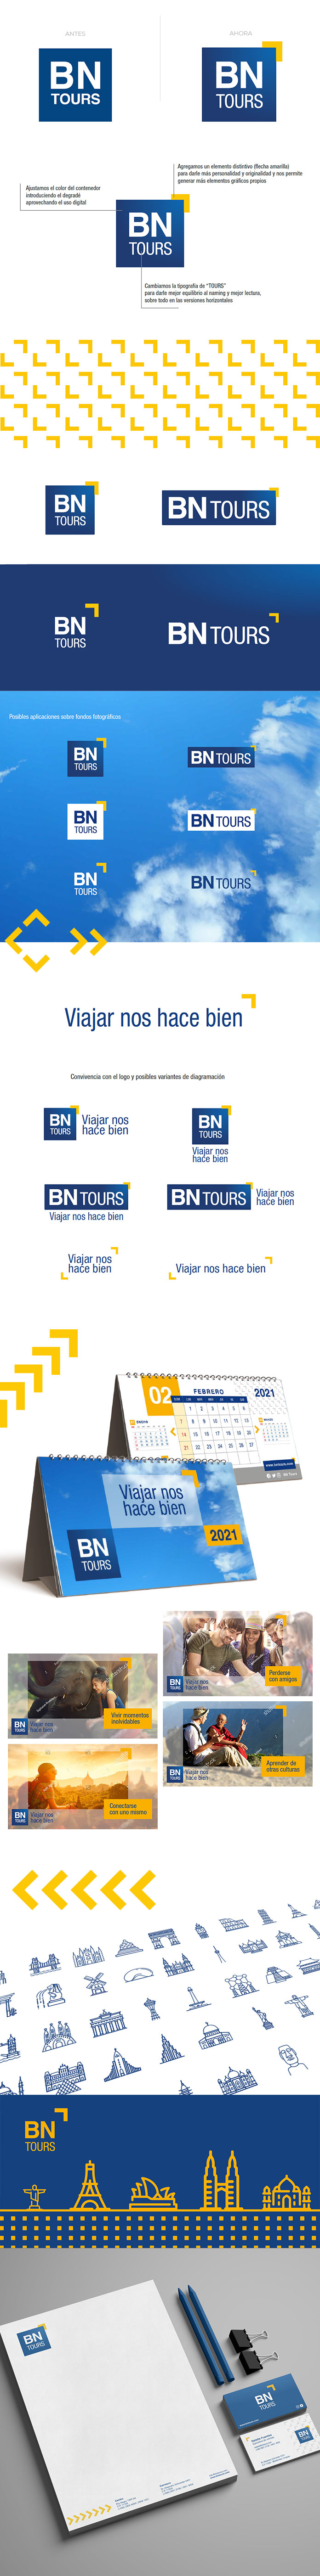 Aggiornamiento de marca e identidad gráfica BN Tours